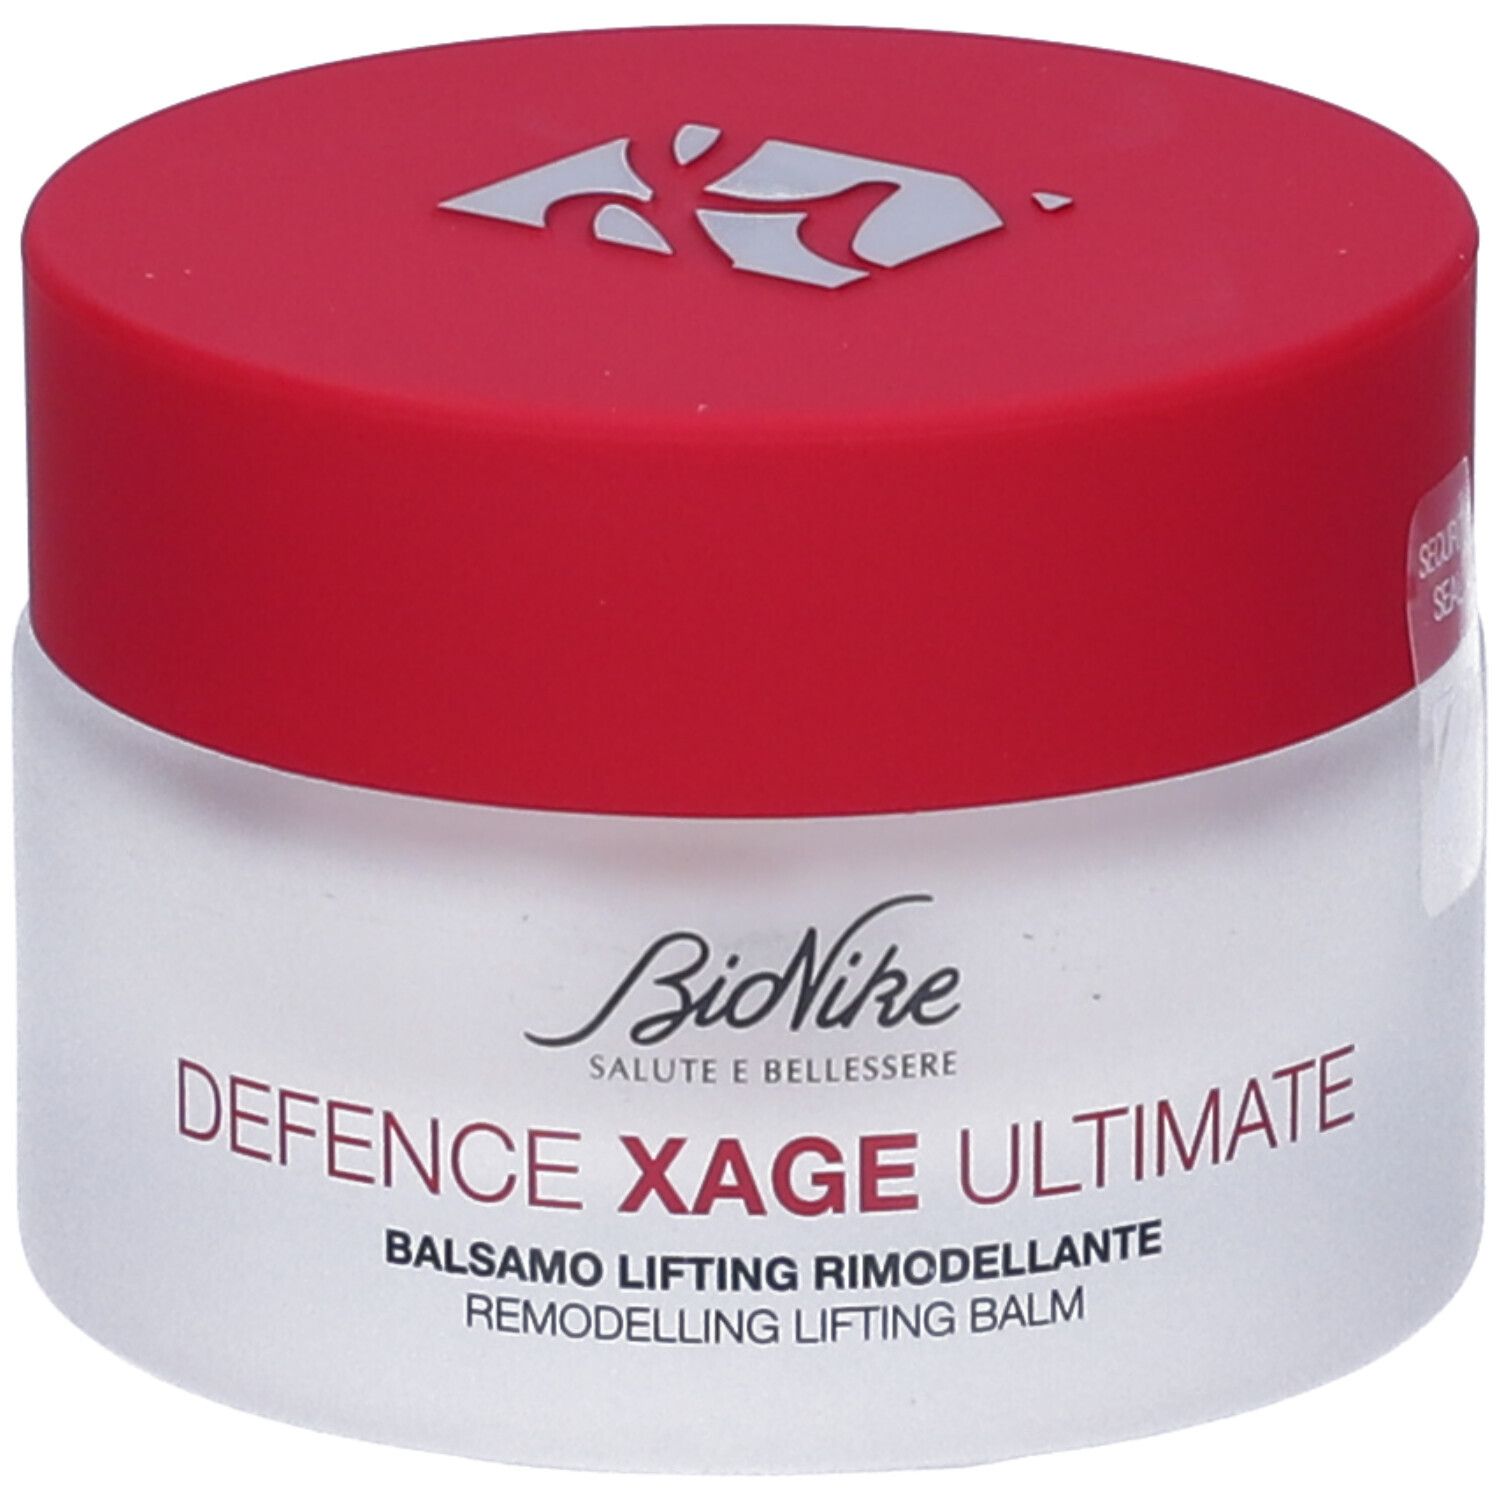 BioNike Defence Xage Ultimate Rich Balsamo Lifting Rimodellante +  Defence X Age Lifting Kit GRATIS